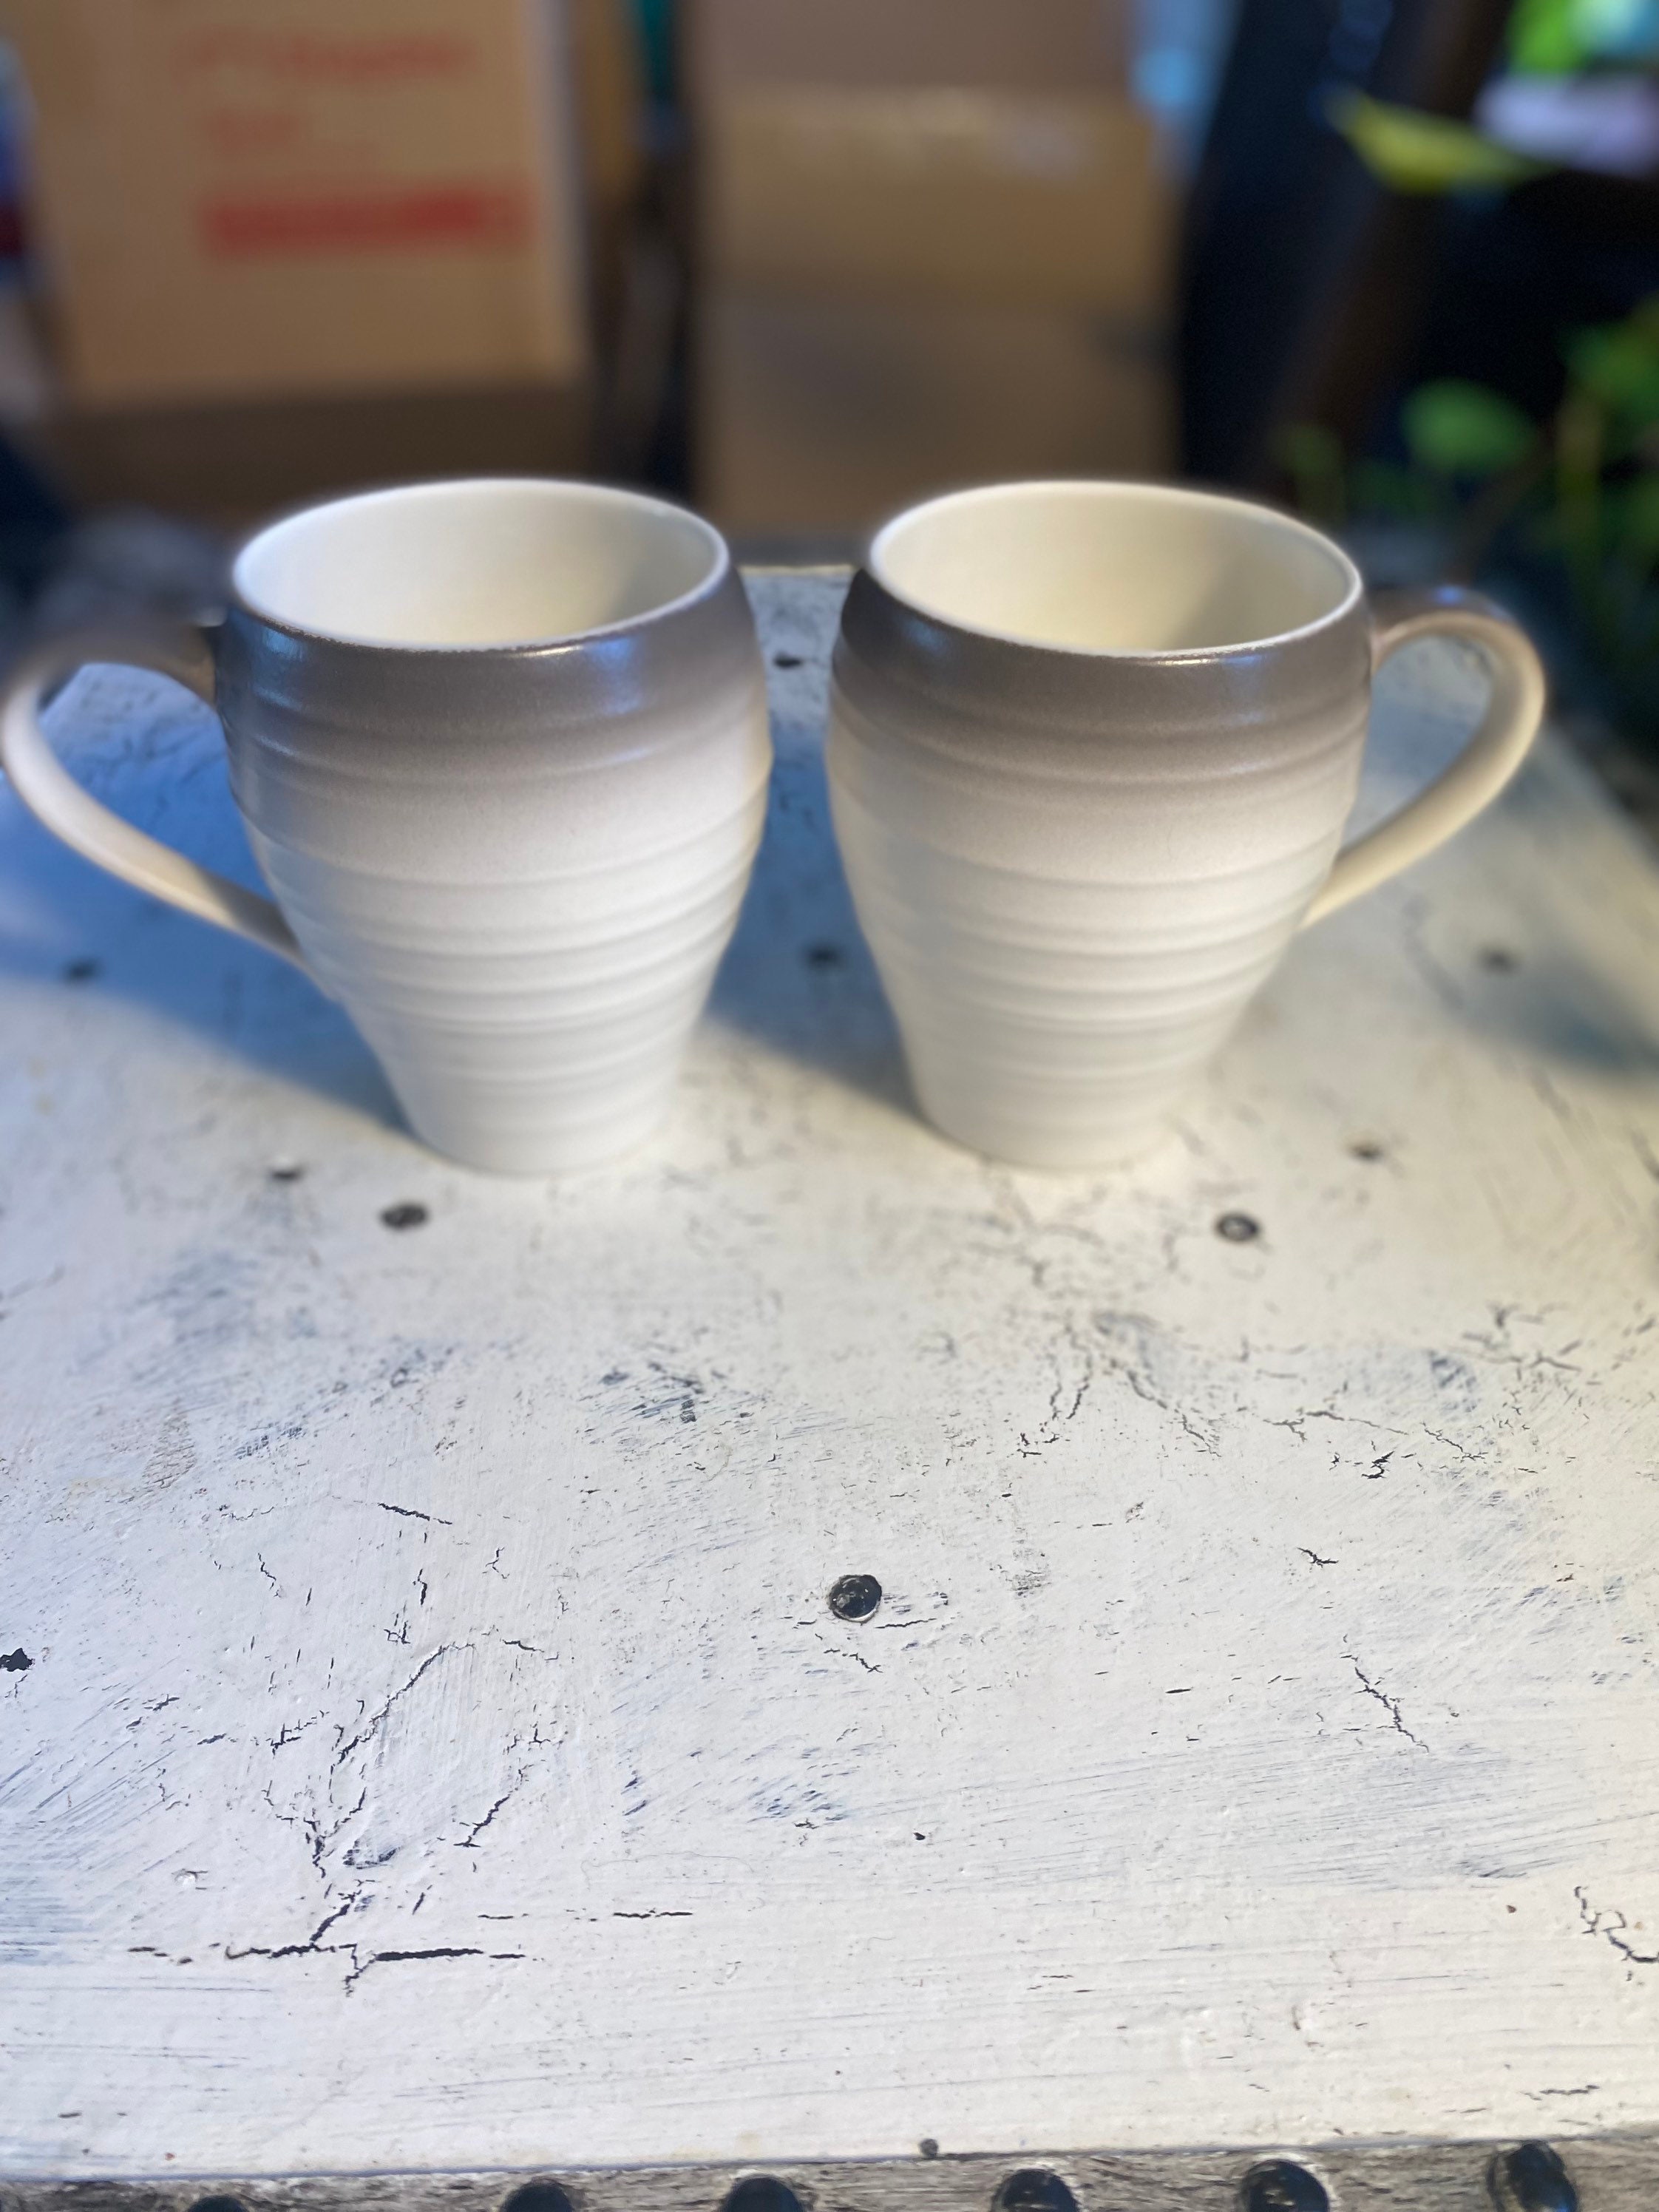 Set of 4 Crate & Barrel White Maison Mugs & Saucers Japan Coffee Tea Cups 8  oz